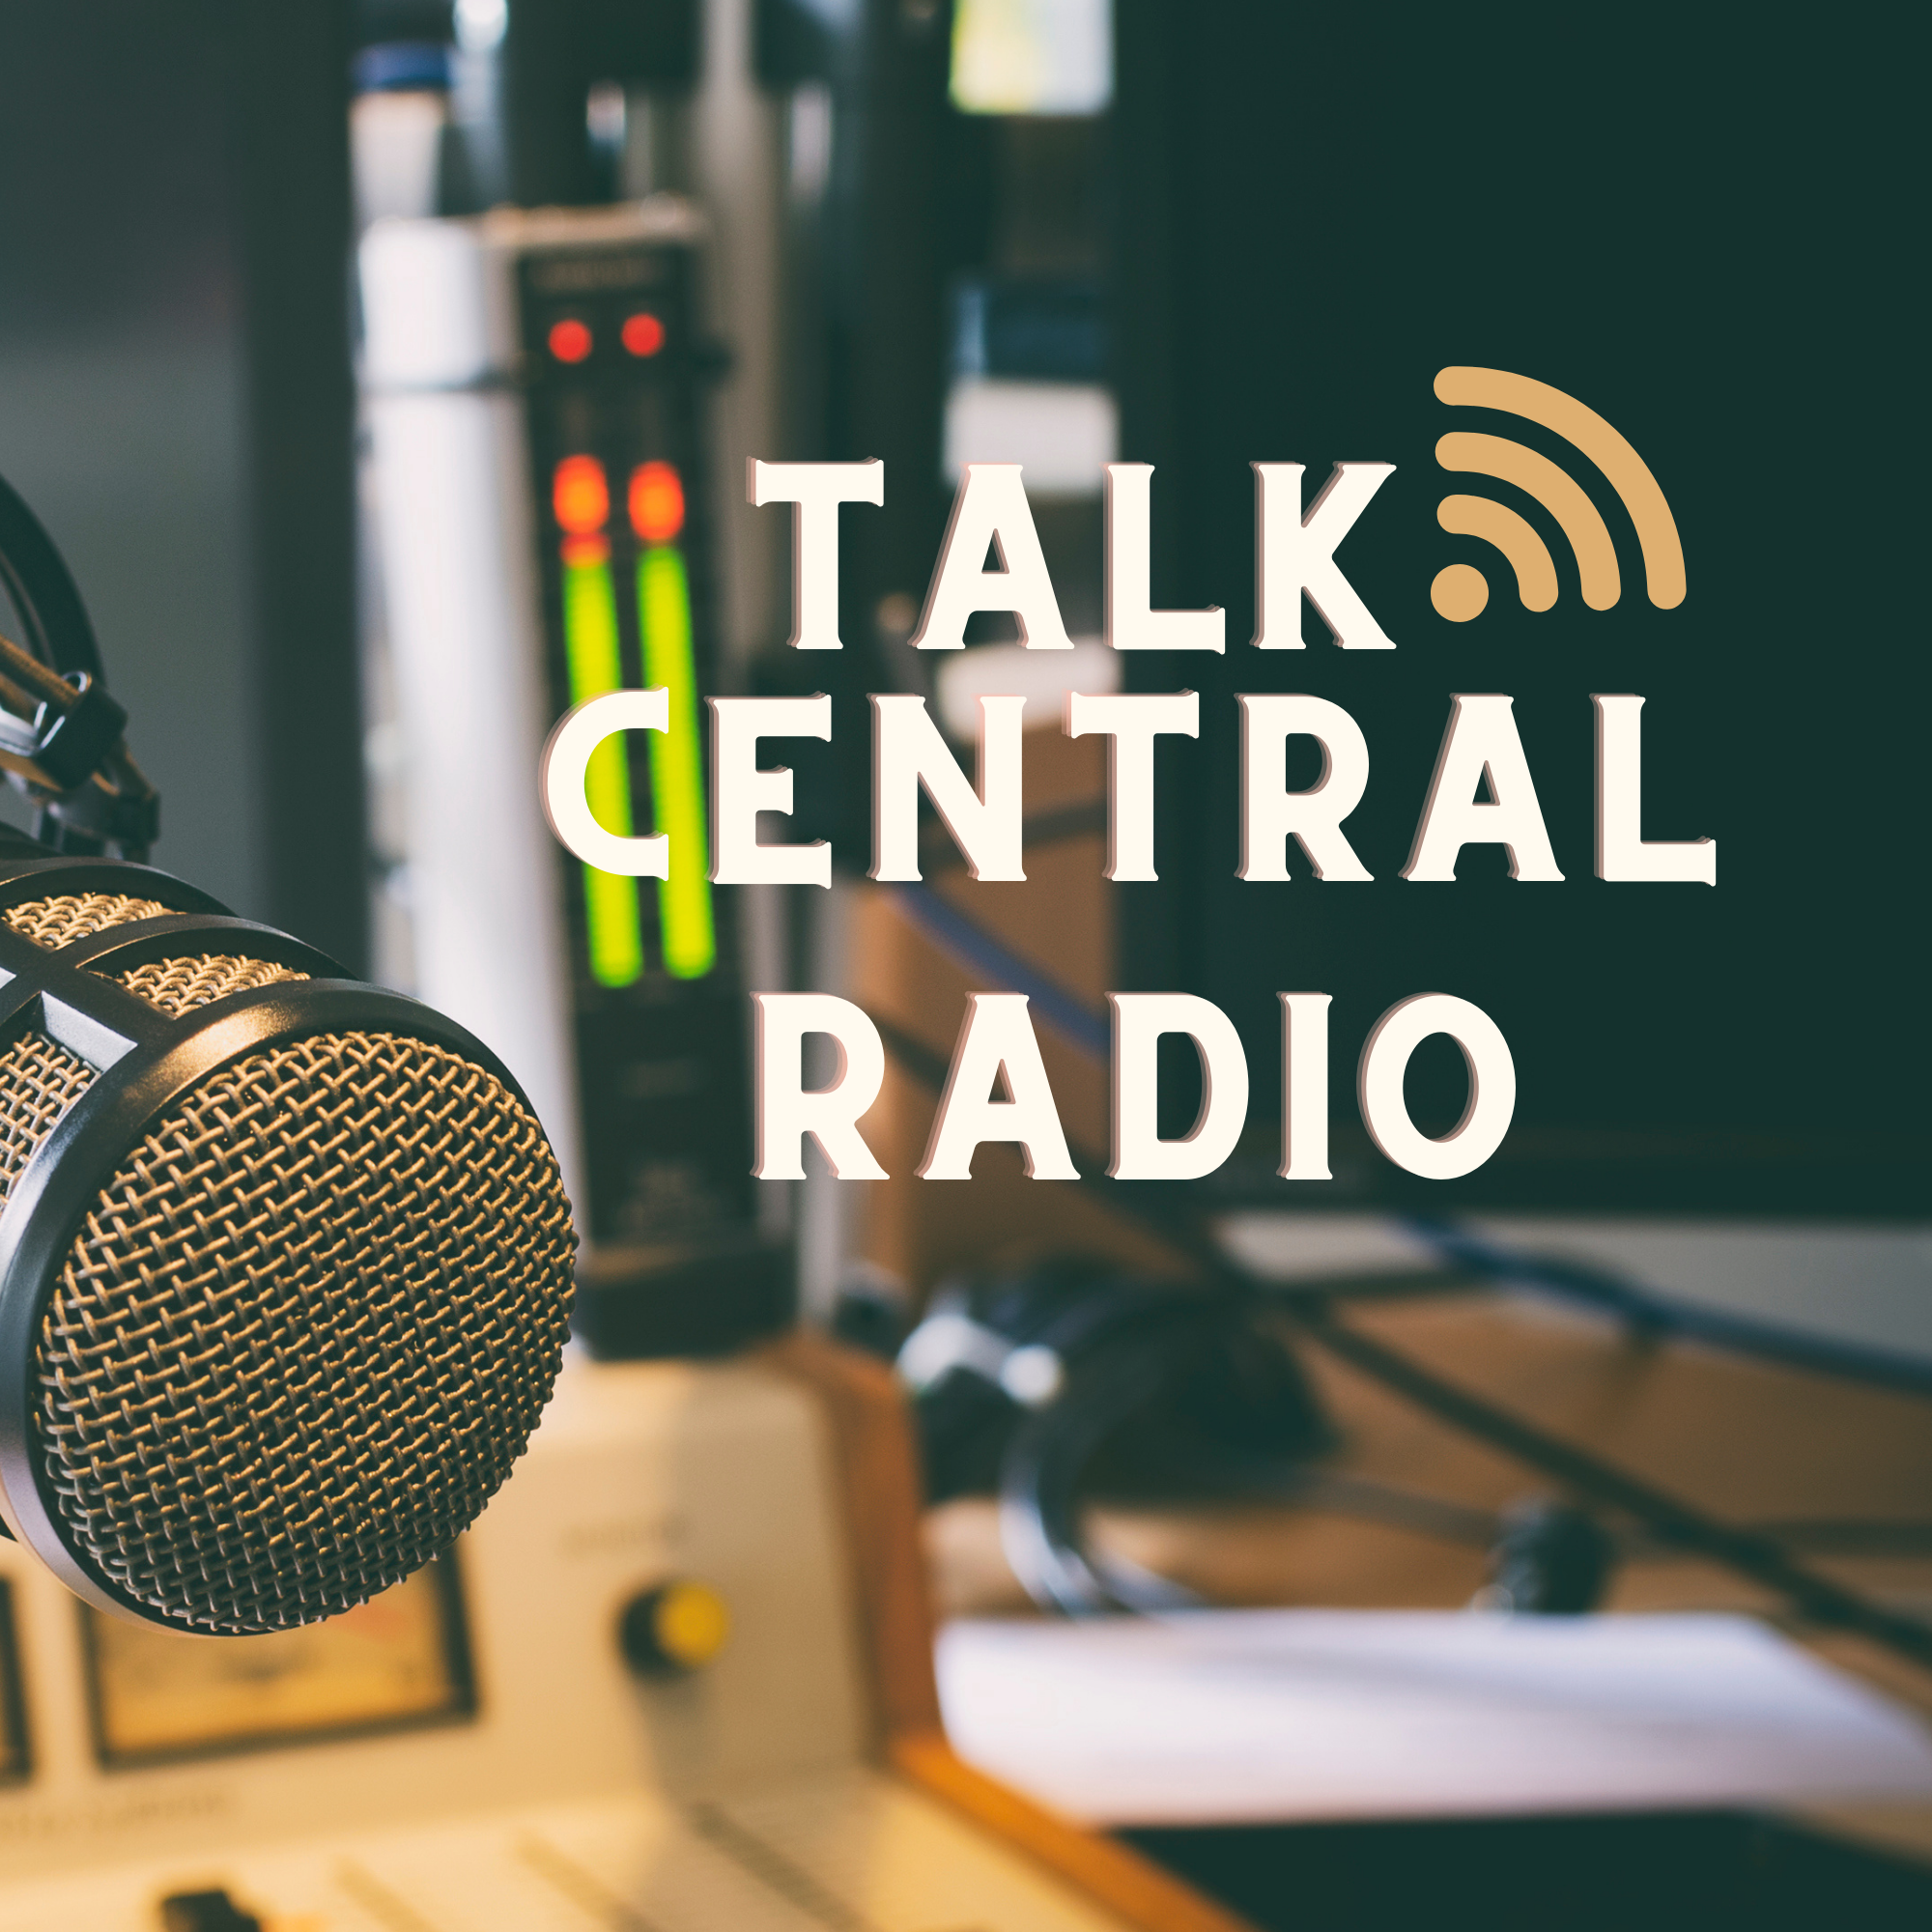 Talk Central Radio